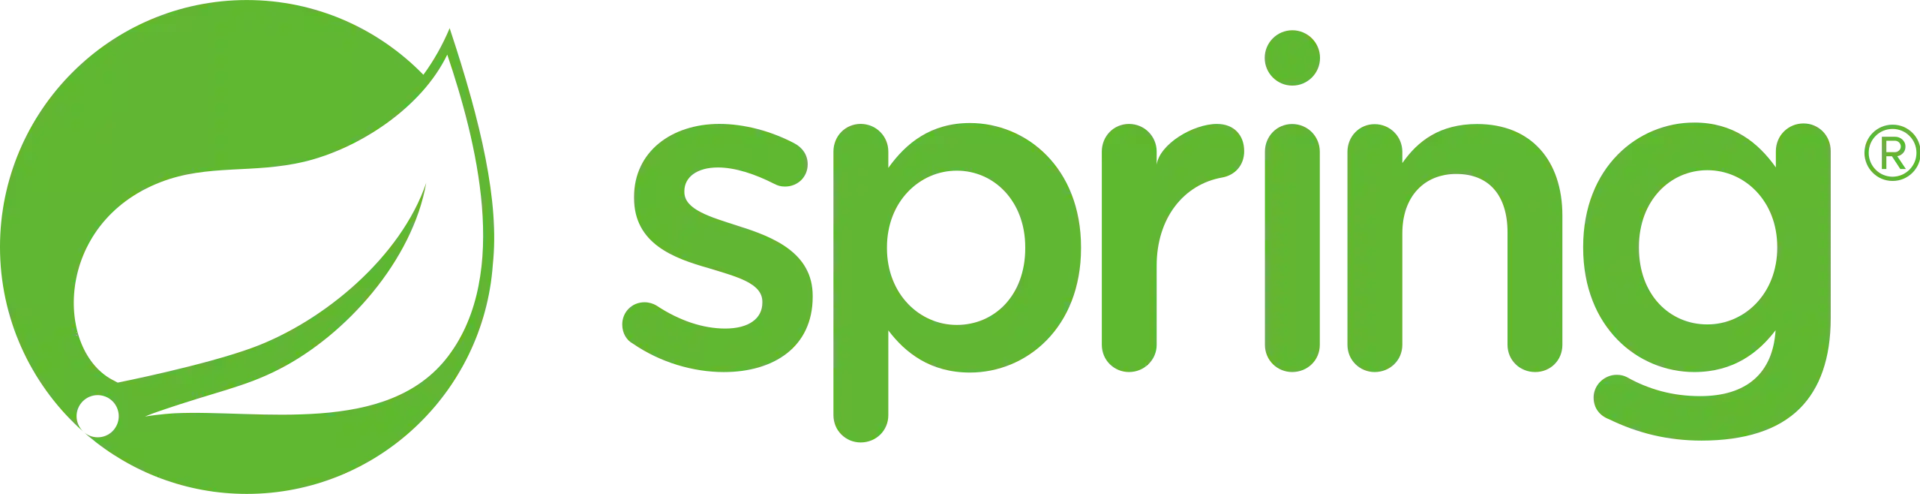 Web Application Development Framework Spring_Logo